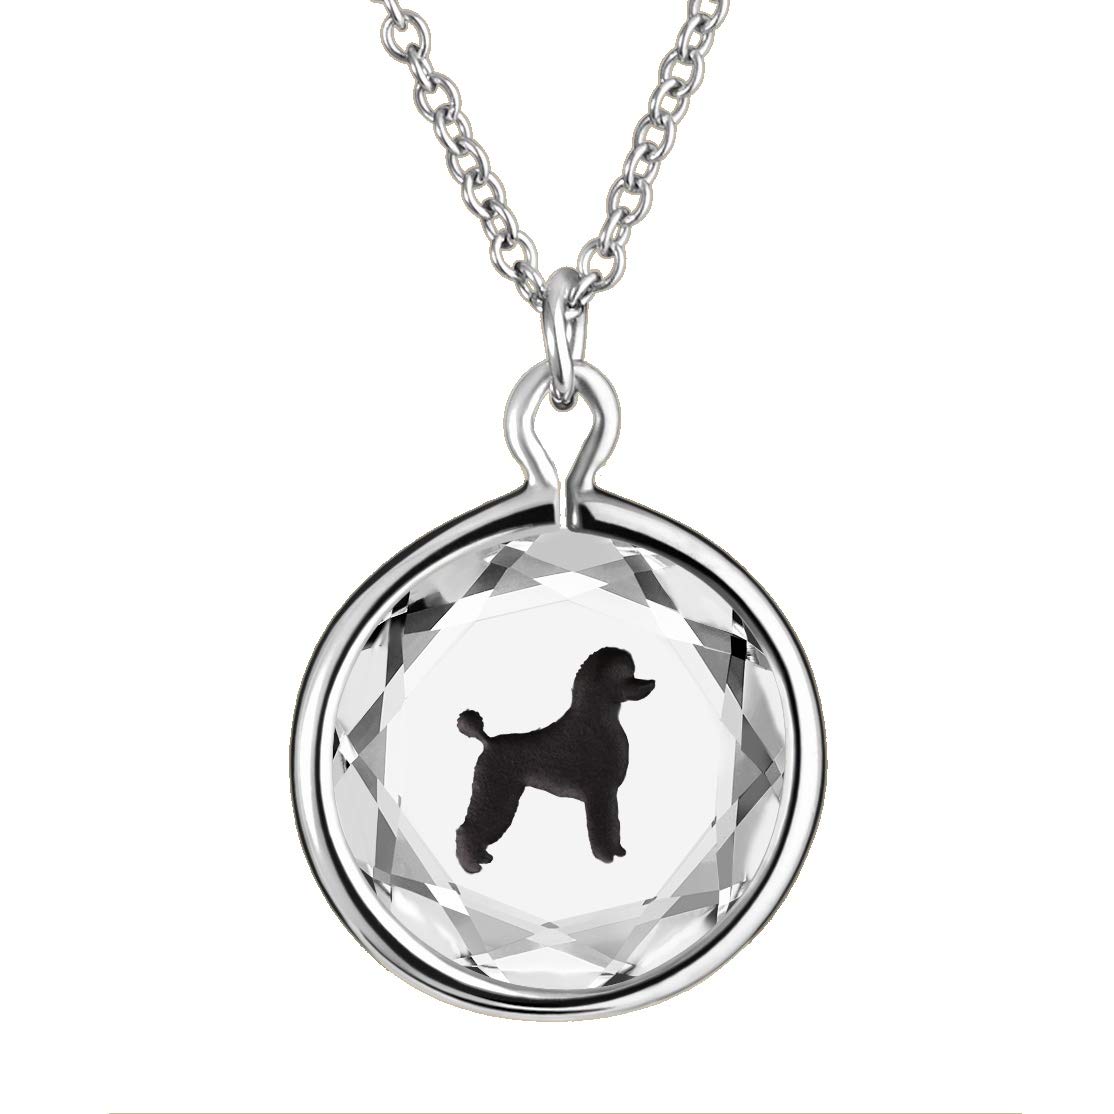 LovePendants Engraved and Enameled Swarovski Crystal Poodle Pendant/Necklace in Sterling Silver